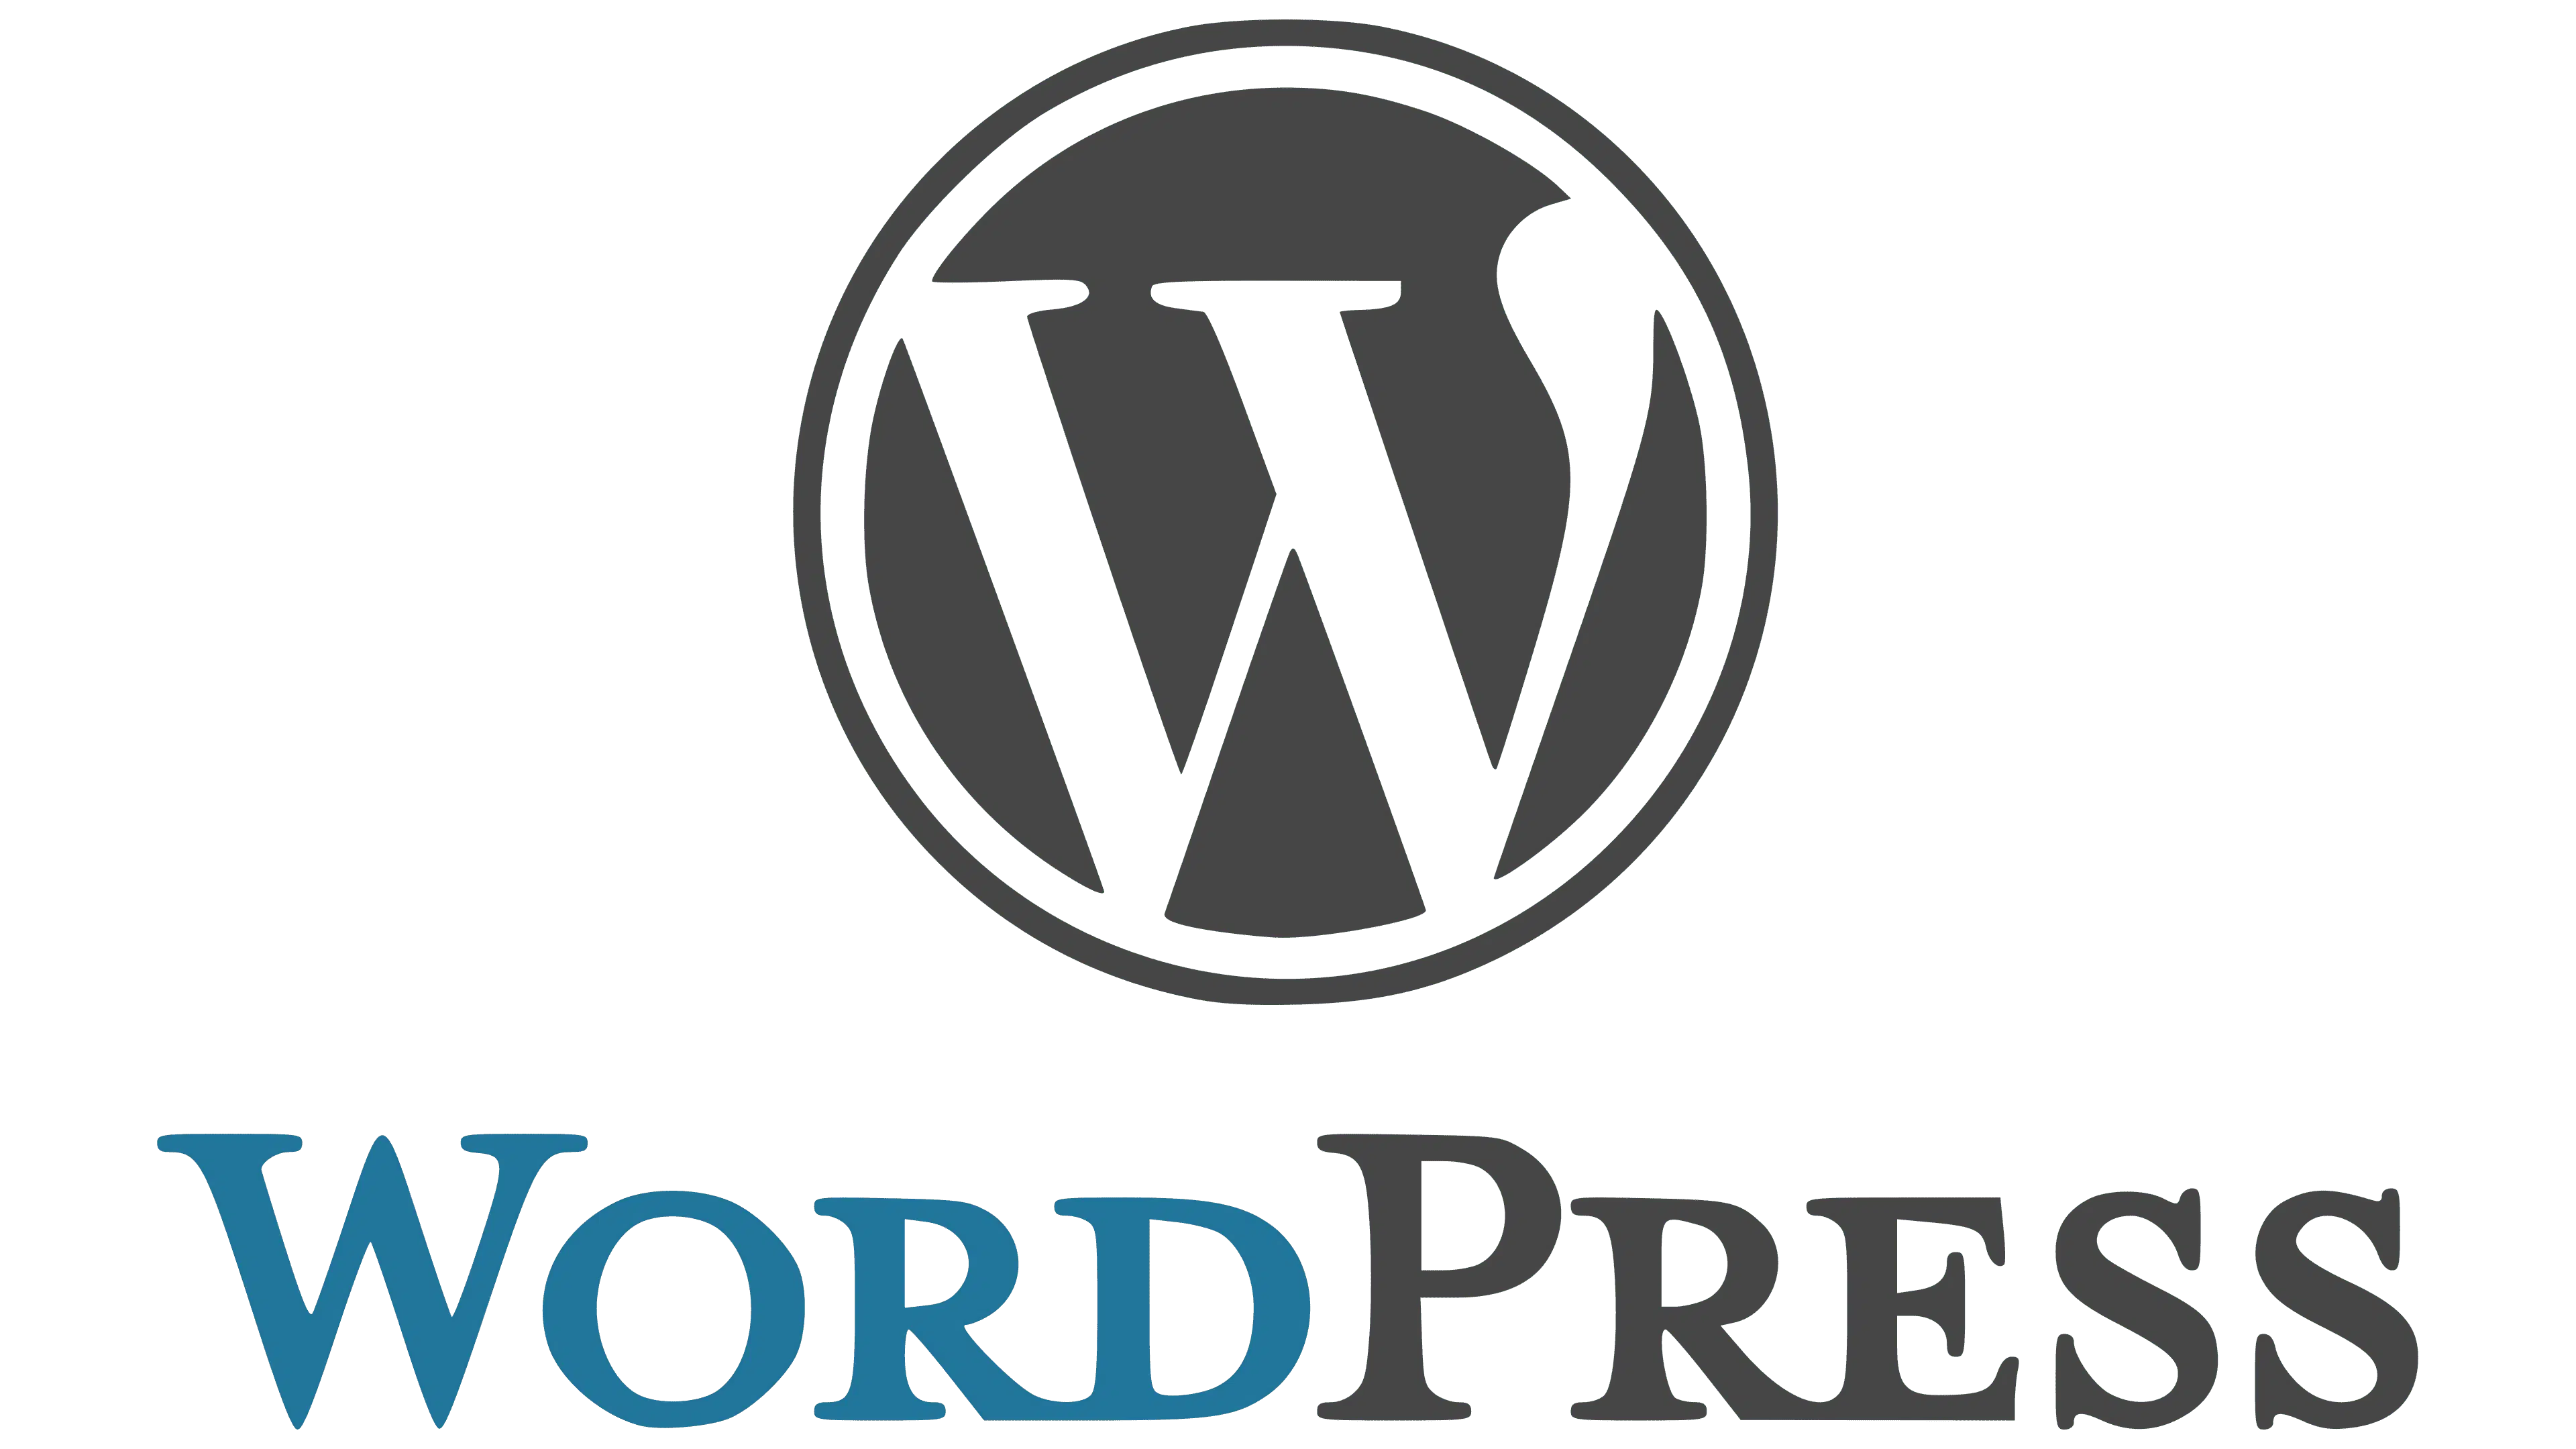 Website design packages for wordpress